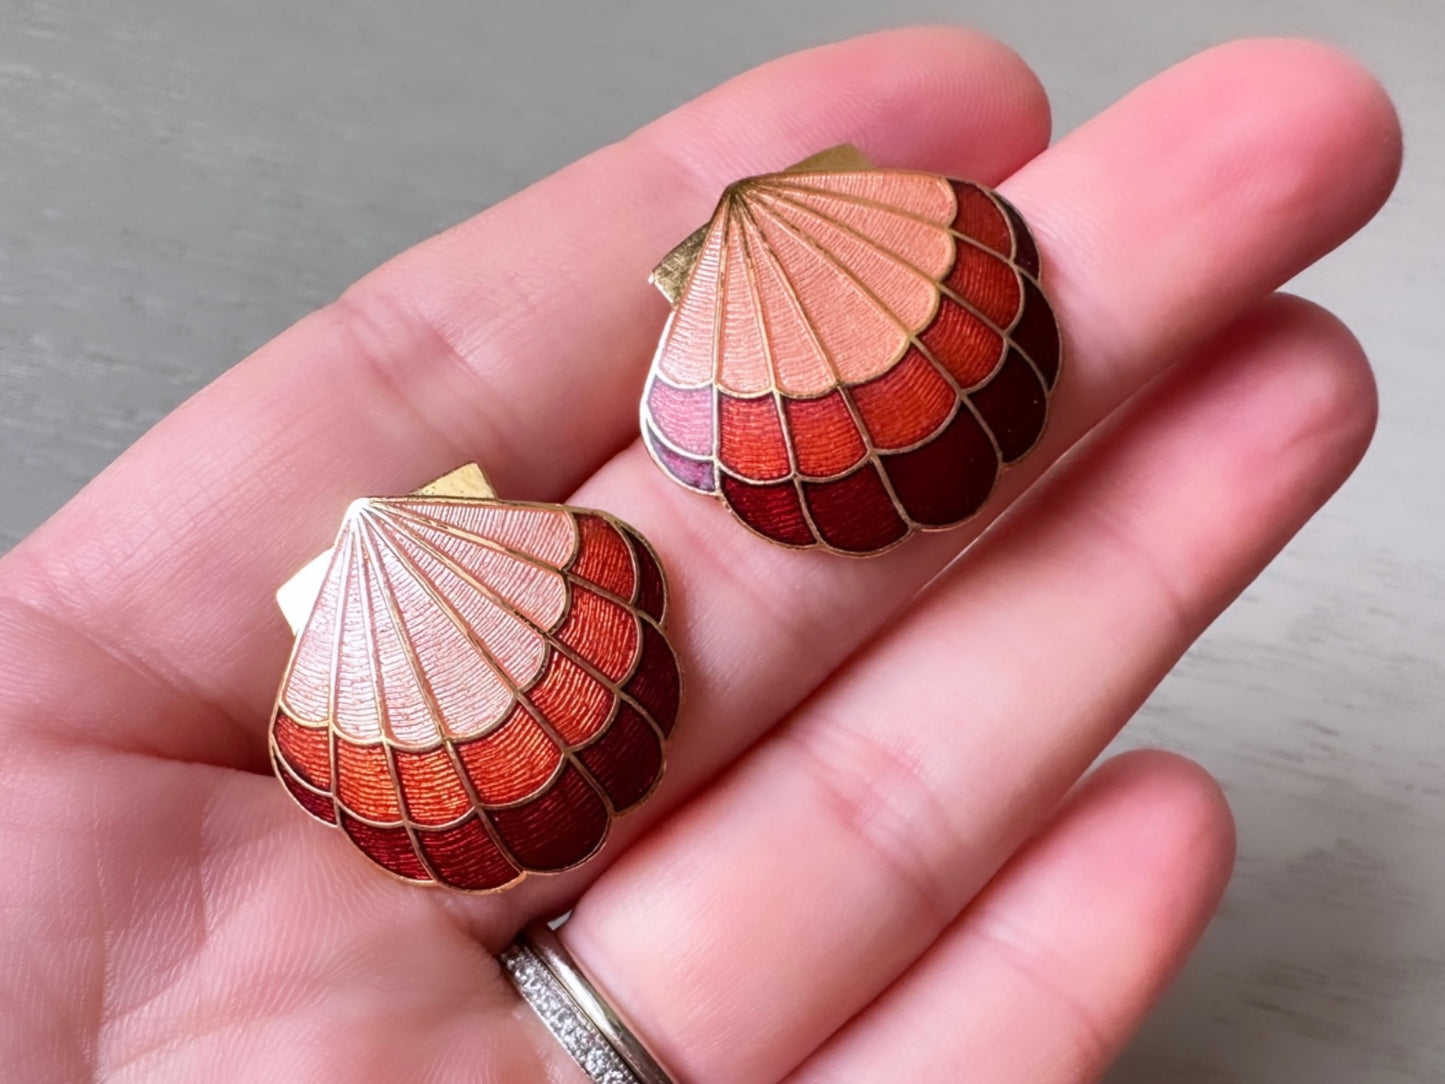 Orange SeaShell Earrings, 1980s Vintage Pierced Earrings, Peach Red and Gold Scallop Shaped Cloisonné 80's Vintage Shell Earrings